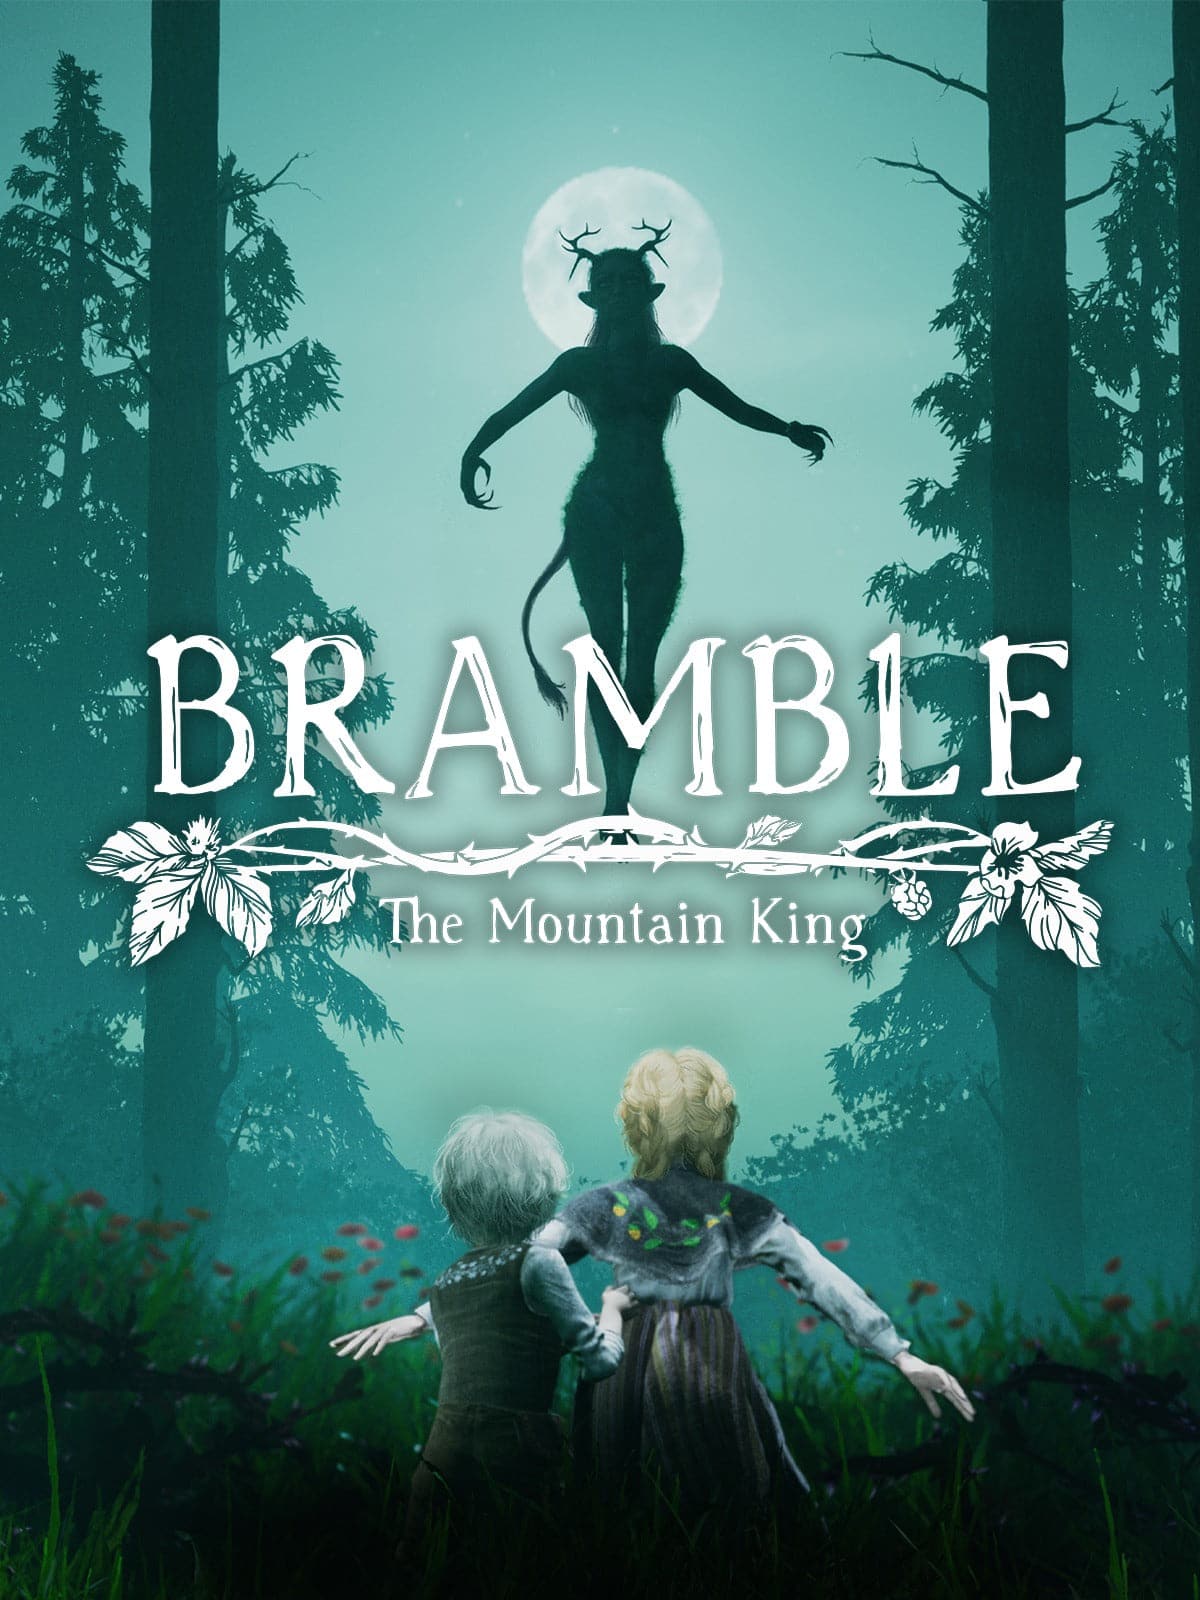 Bramble: The Mountain King (Standard Edition) - Xbox